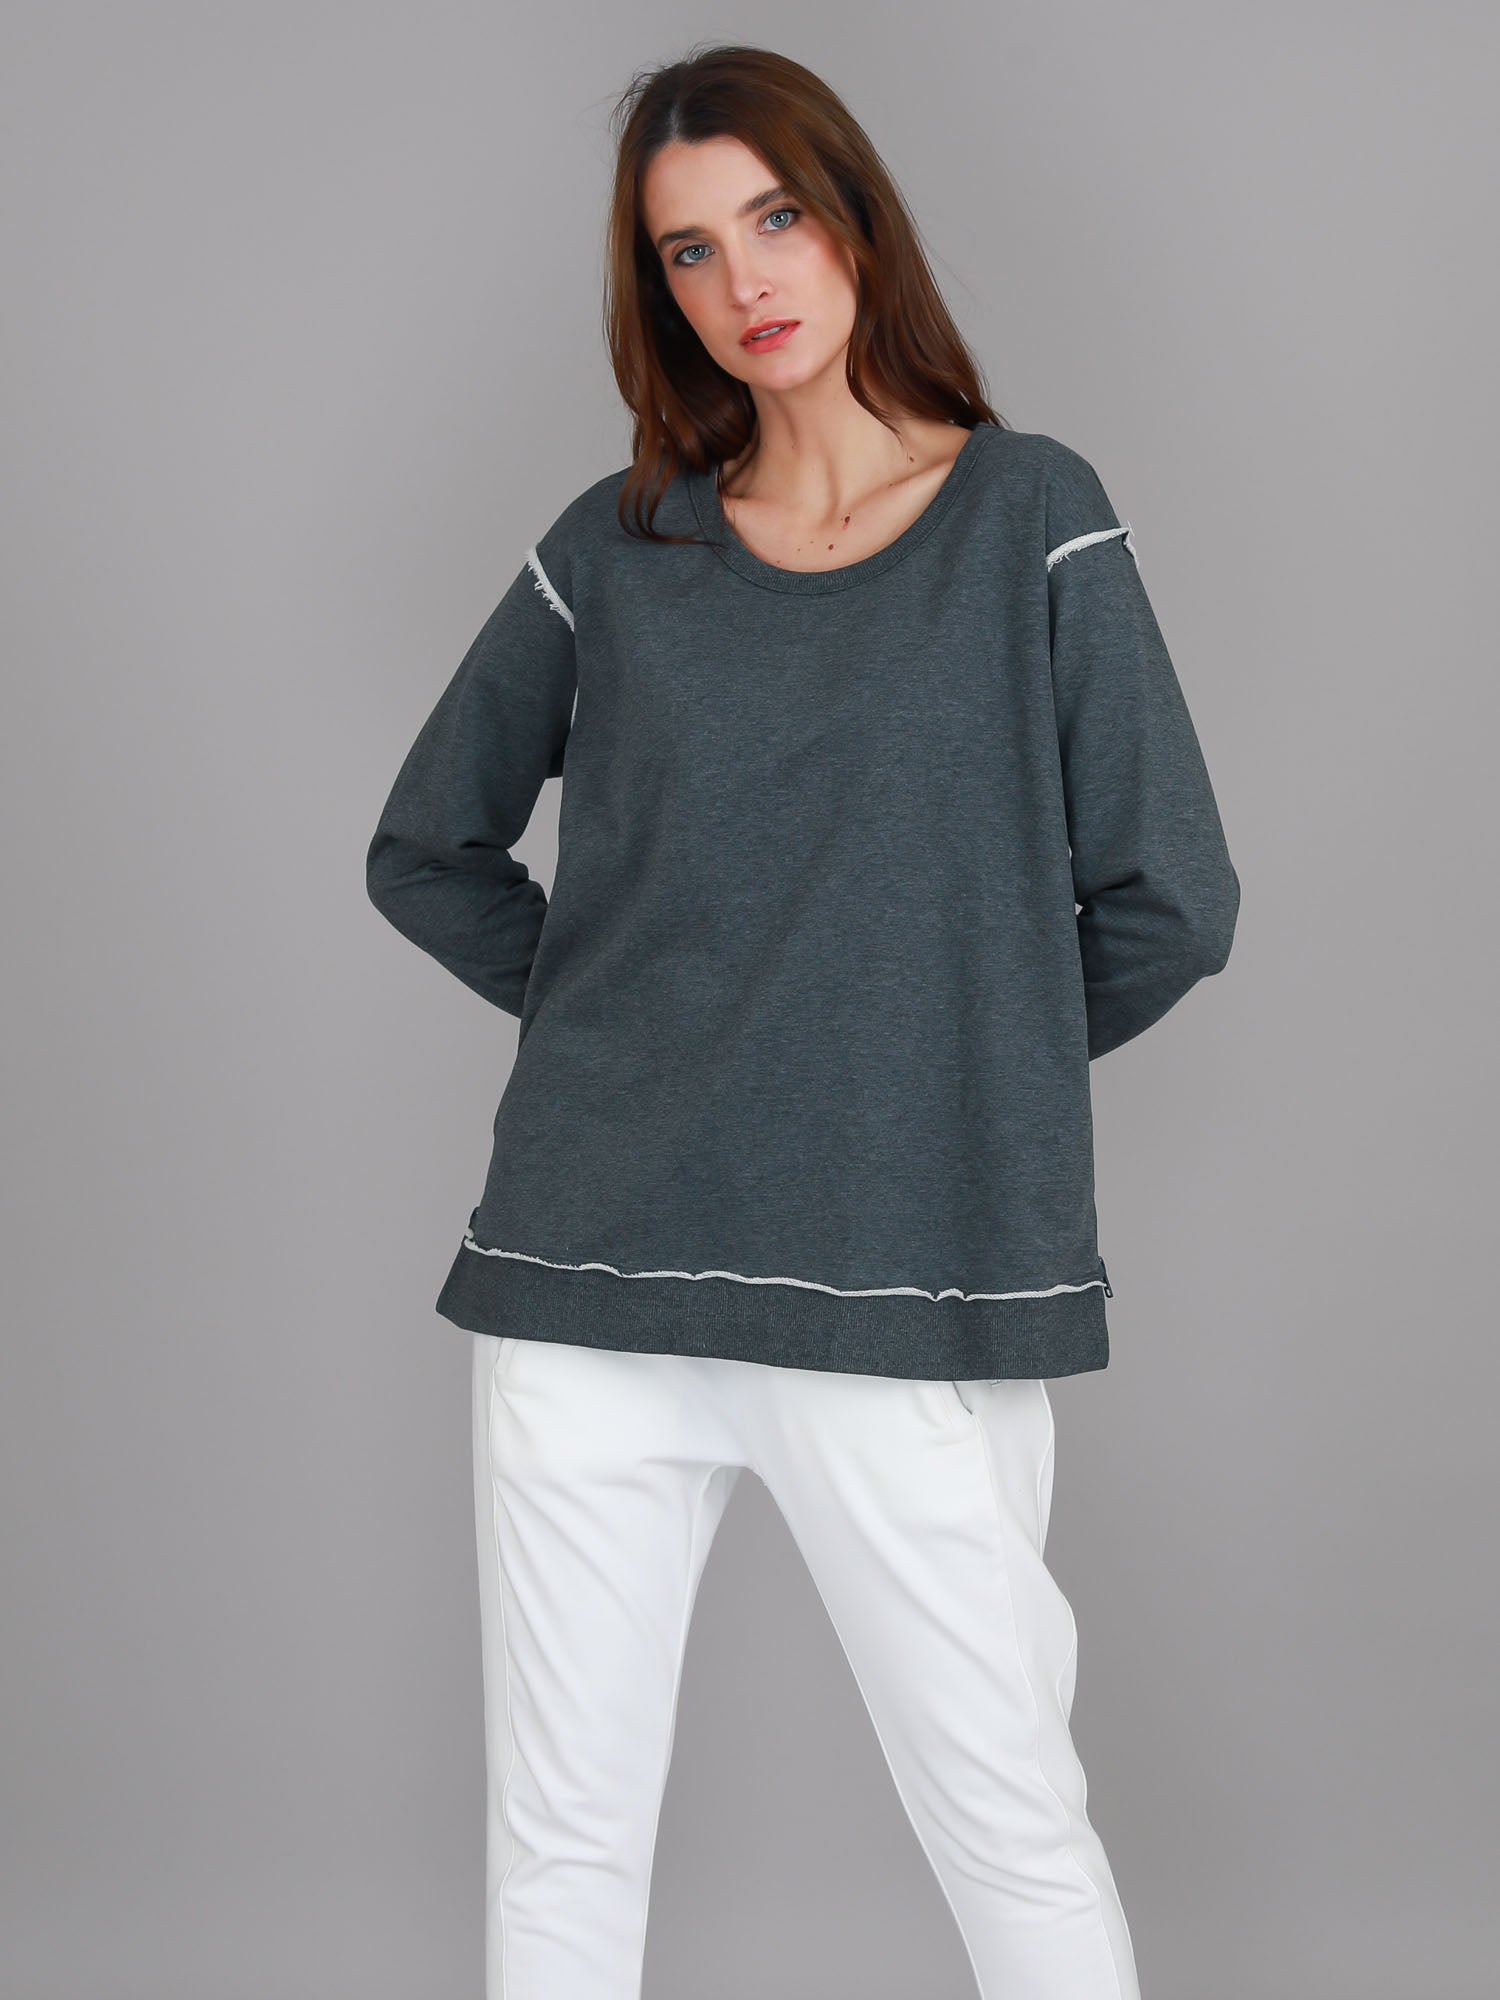 plain grey sweatshirt #color_ash marle